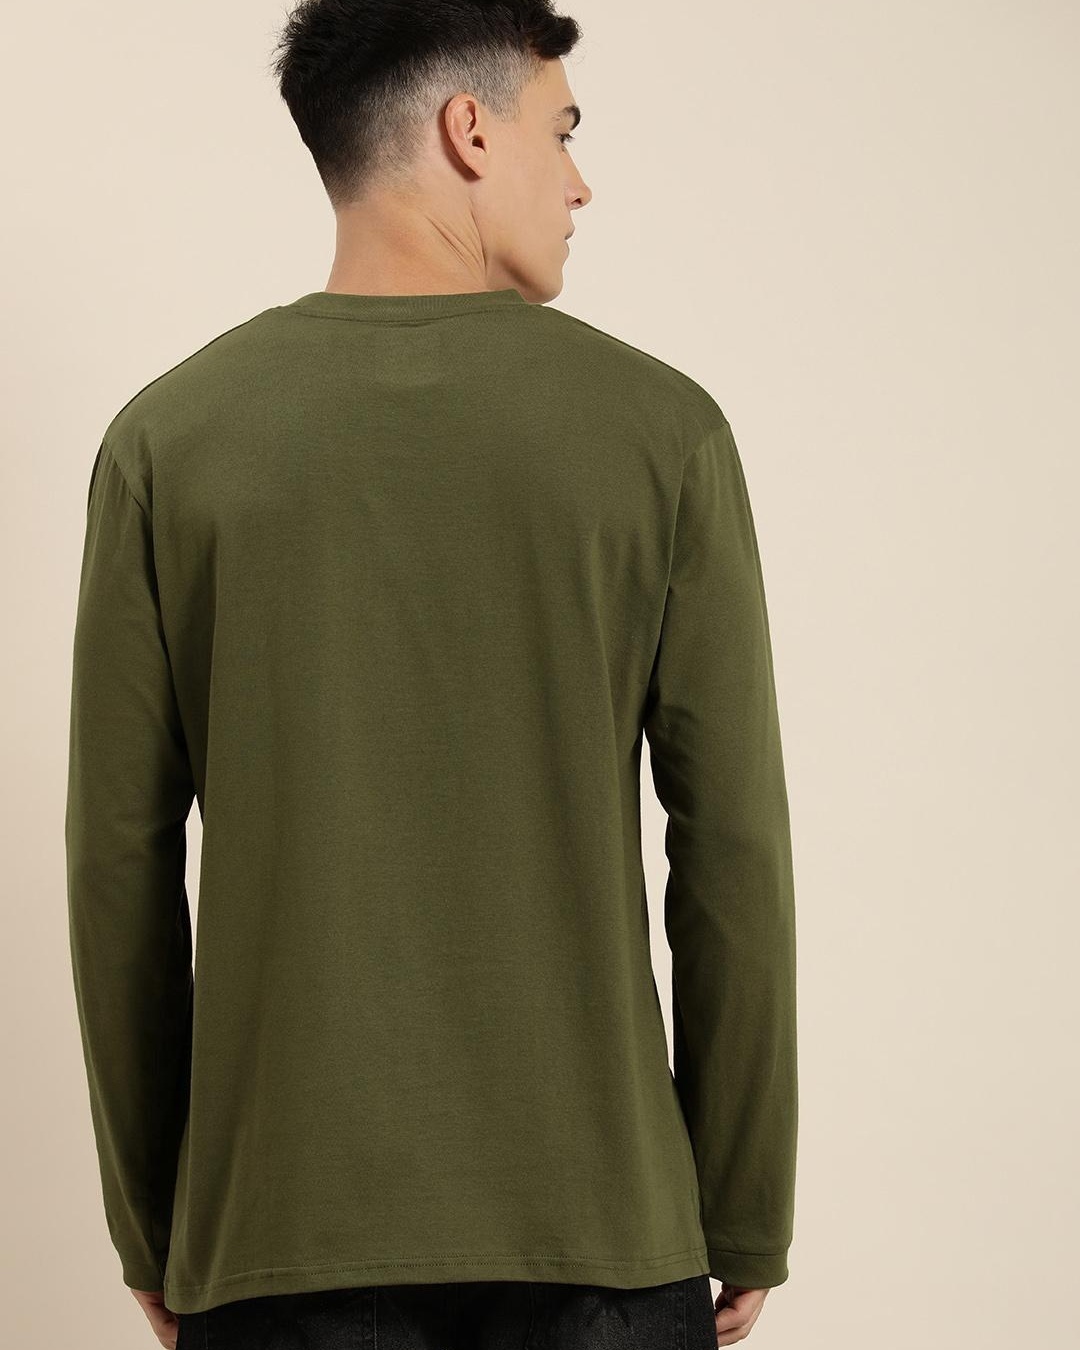 Buy Men's Olive Green Oversized T-shirt Online at Bewakoof